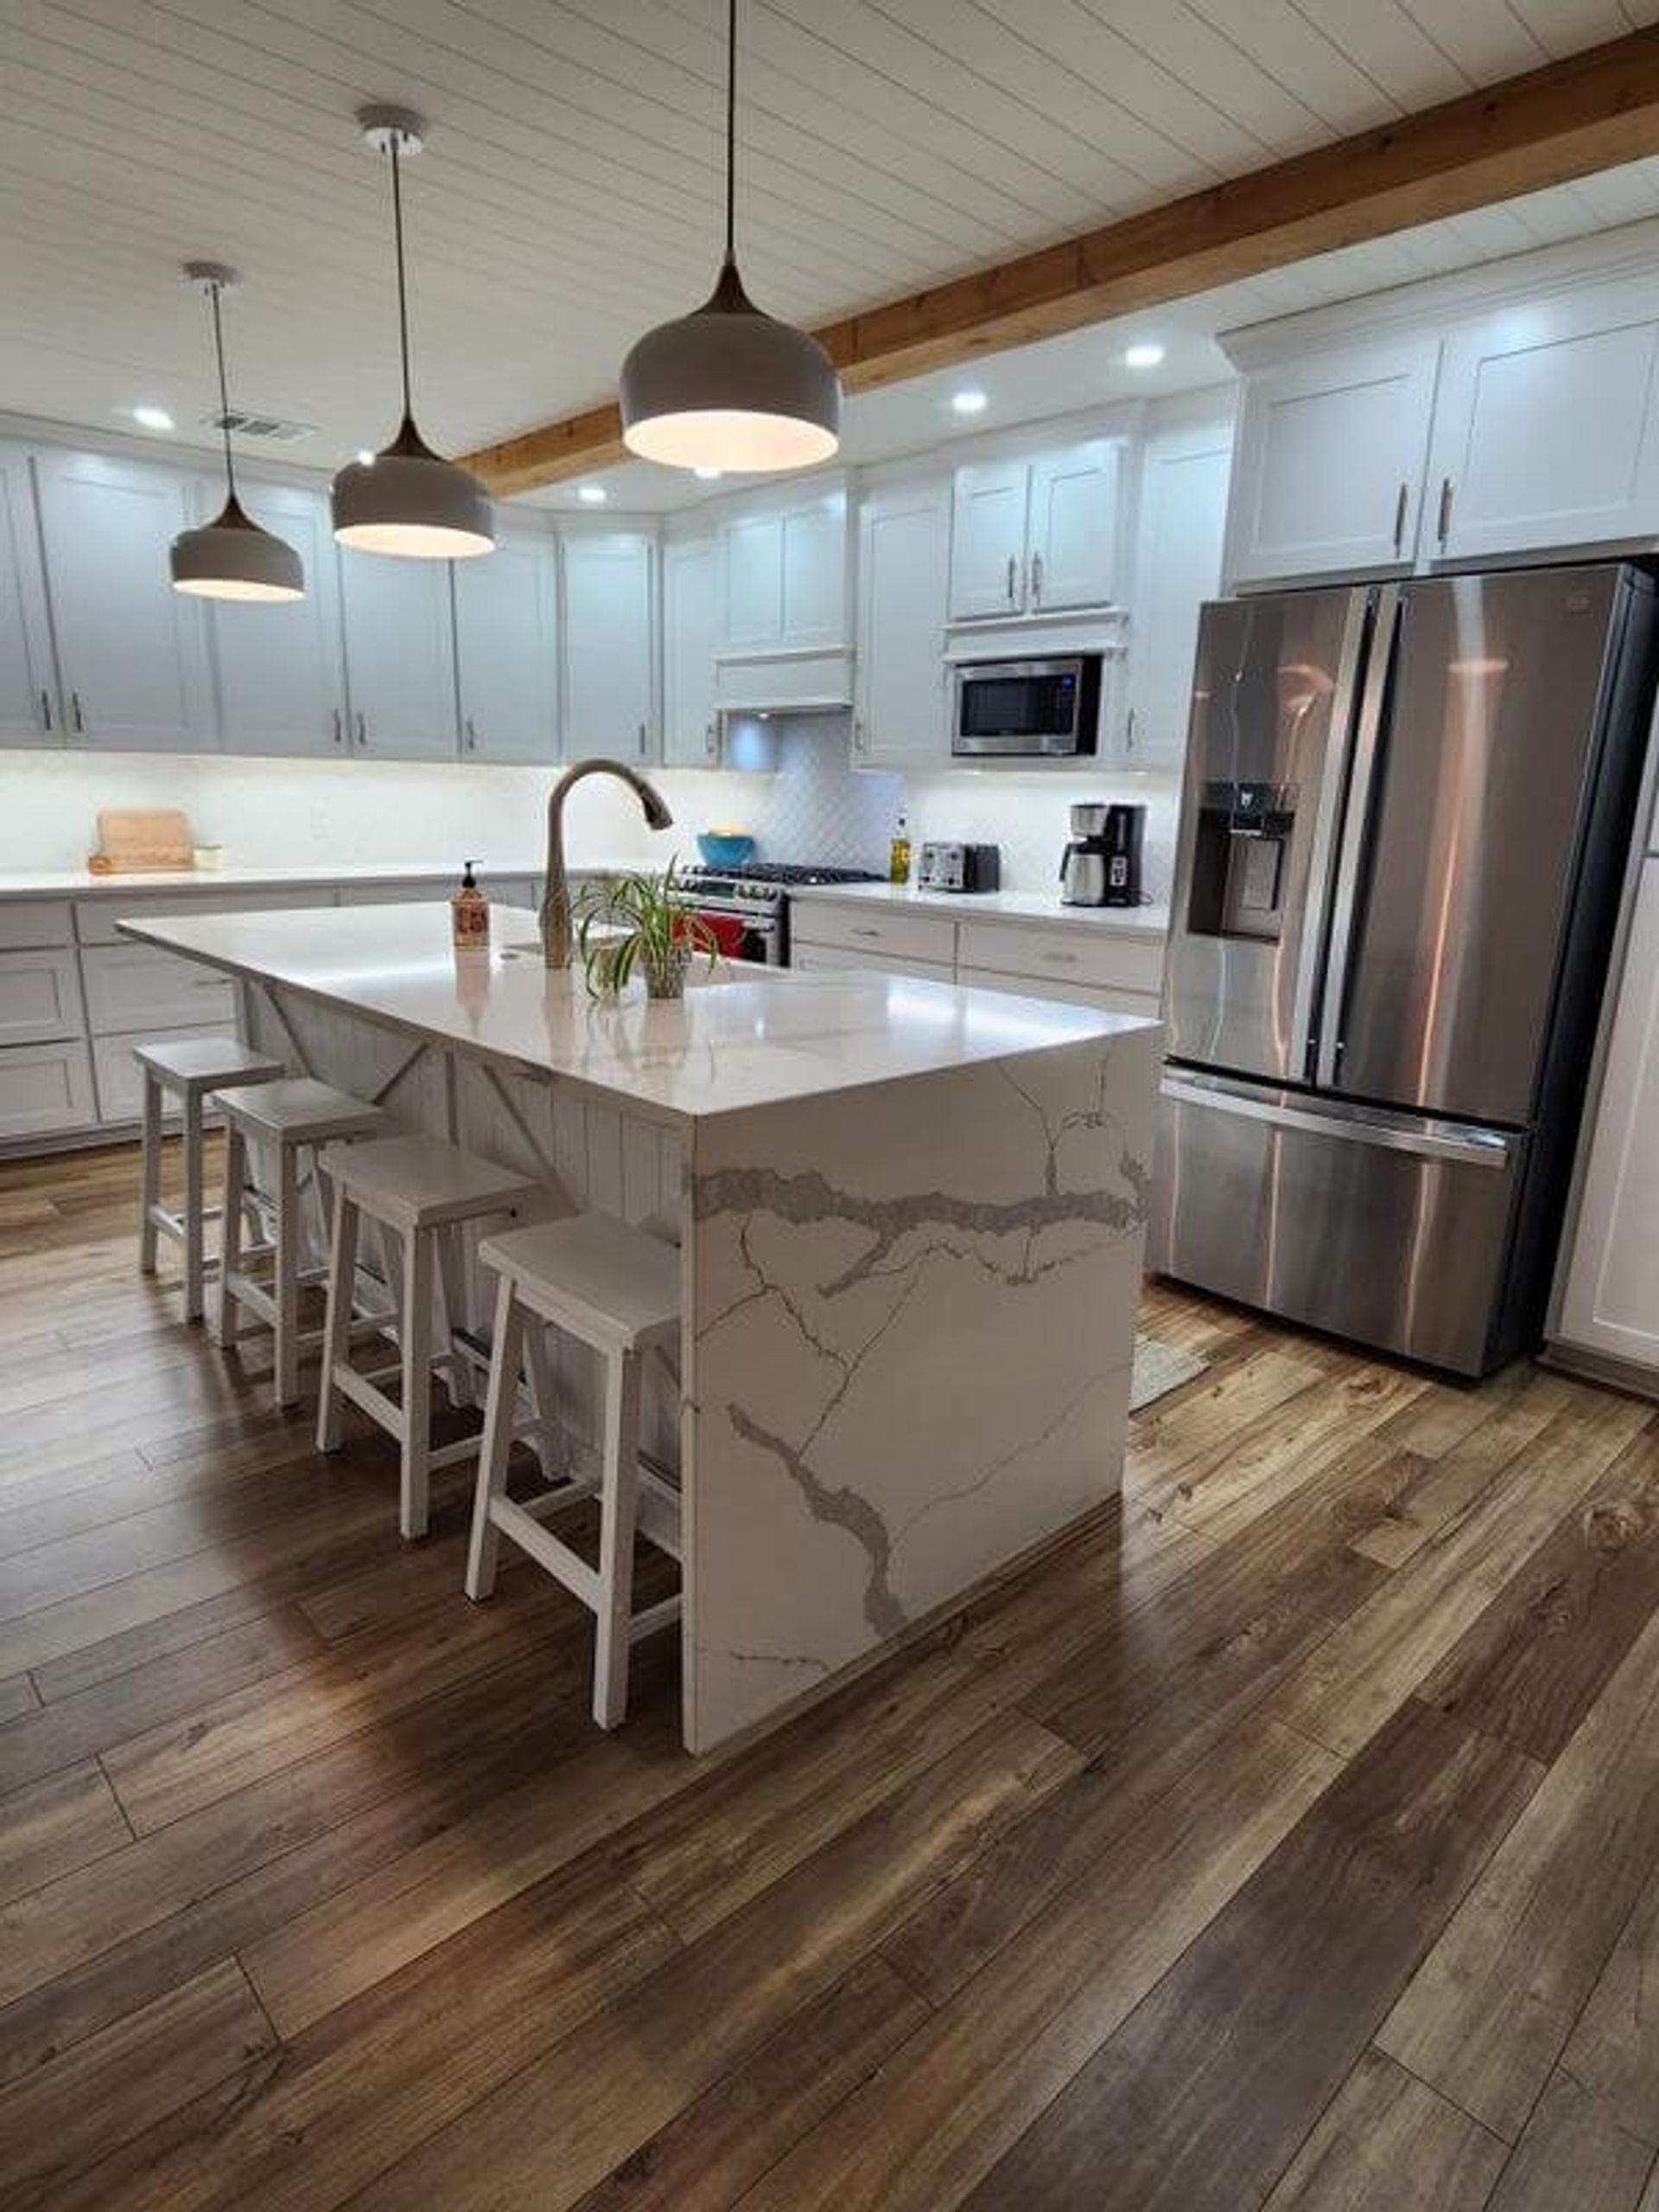 custom kitchen design with wood floors, kitchen island, custom cabinets, and custom lighting